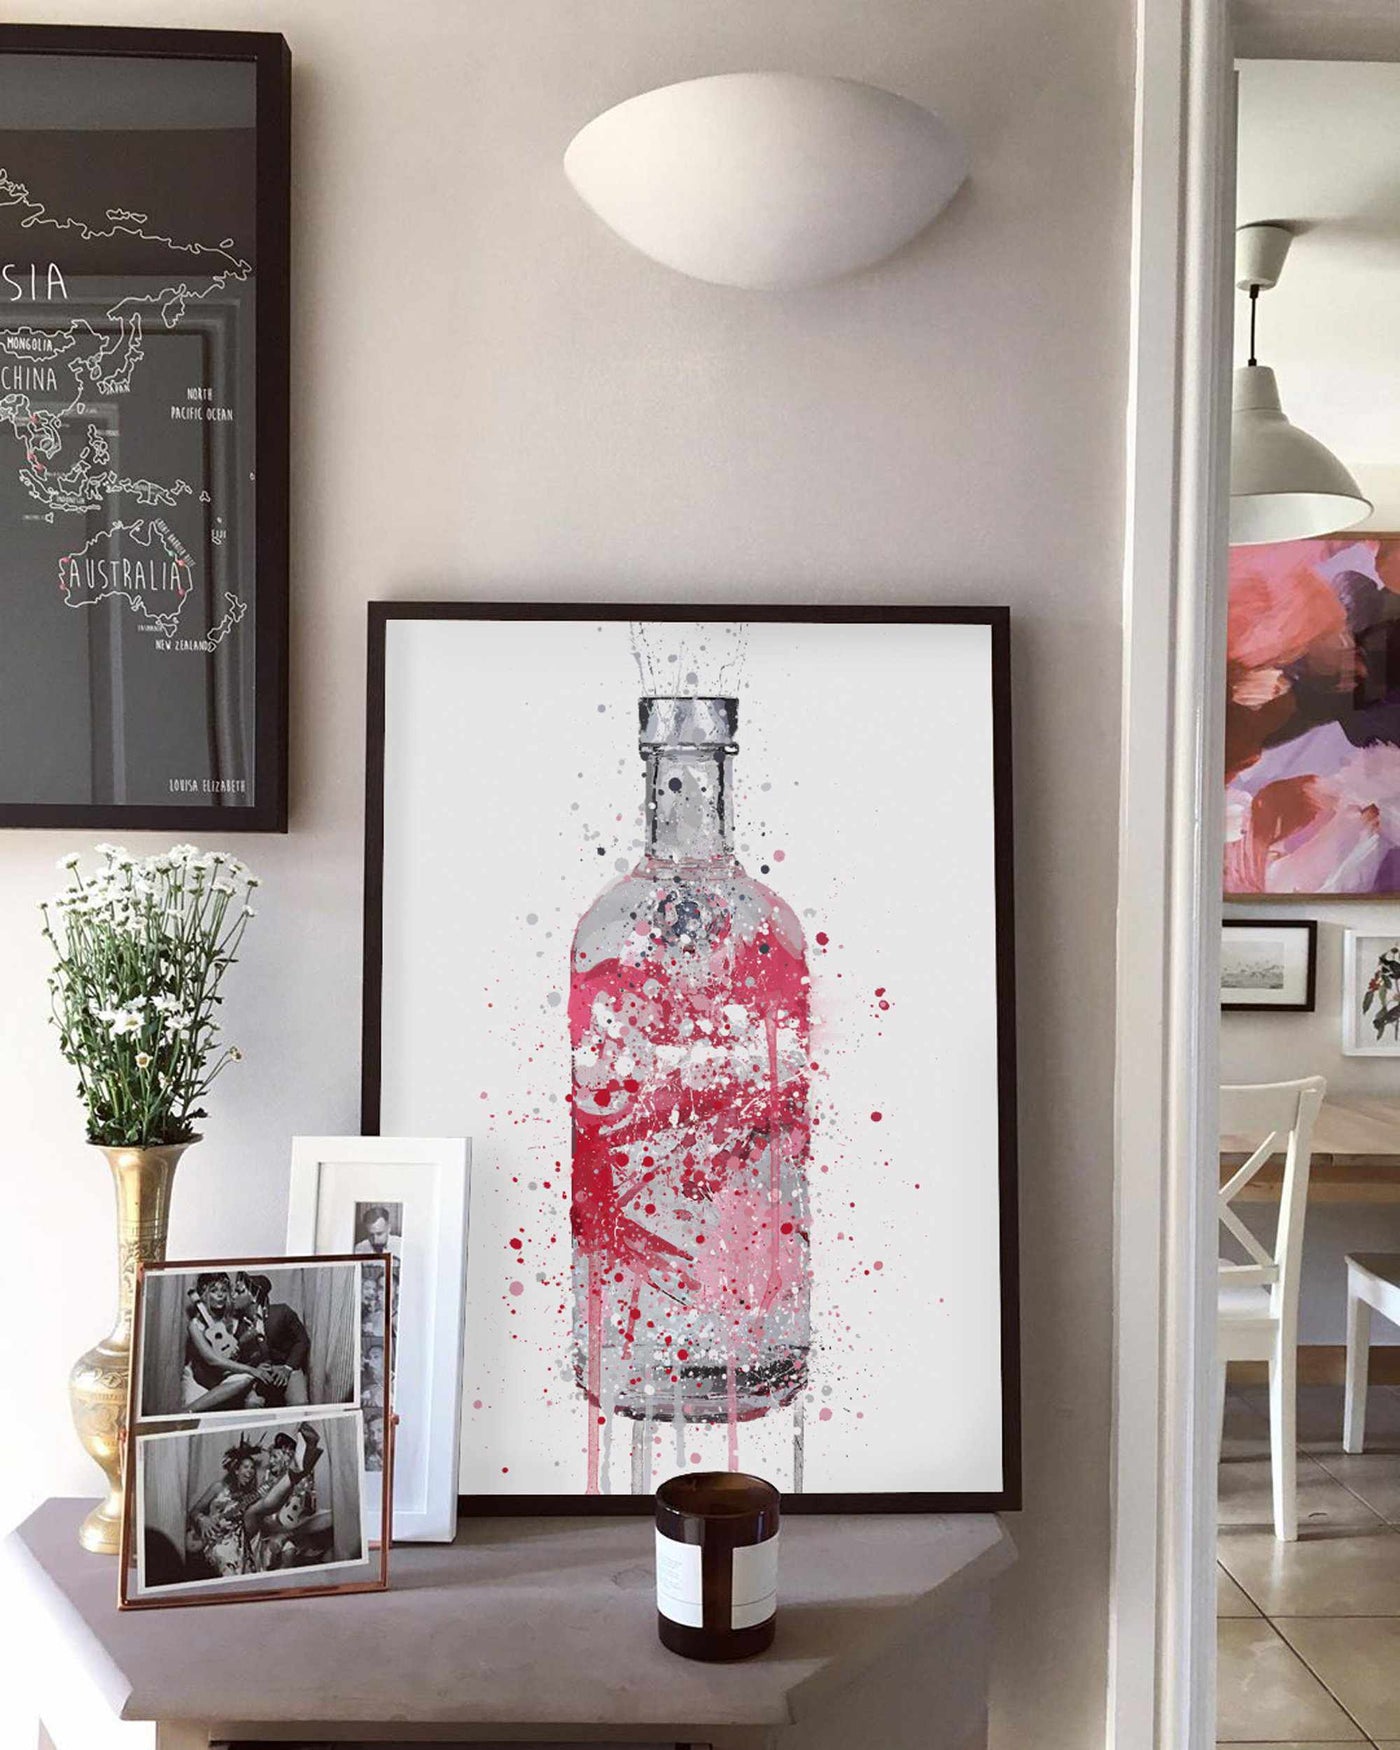 Vodka Bottle Wall Art Print 'Very Berry'-We Love Prints